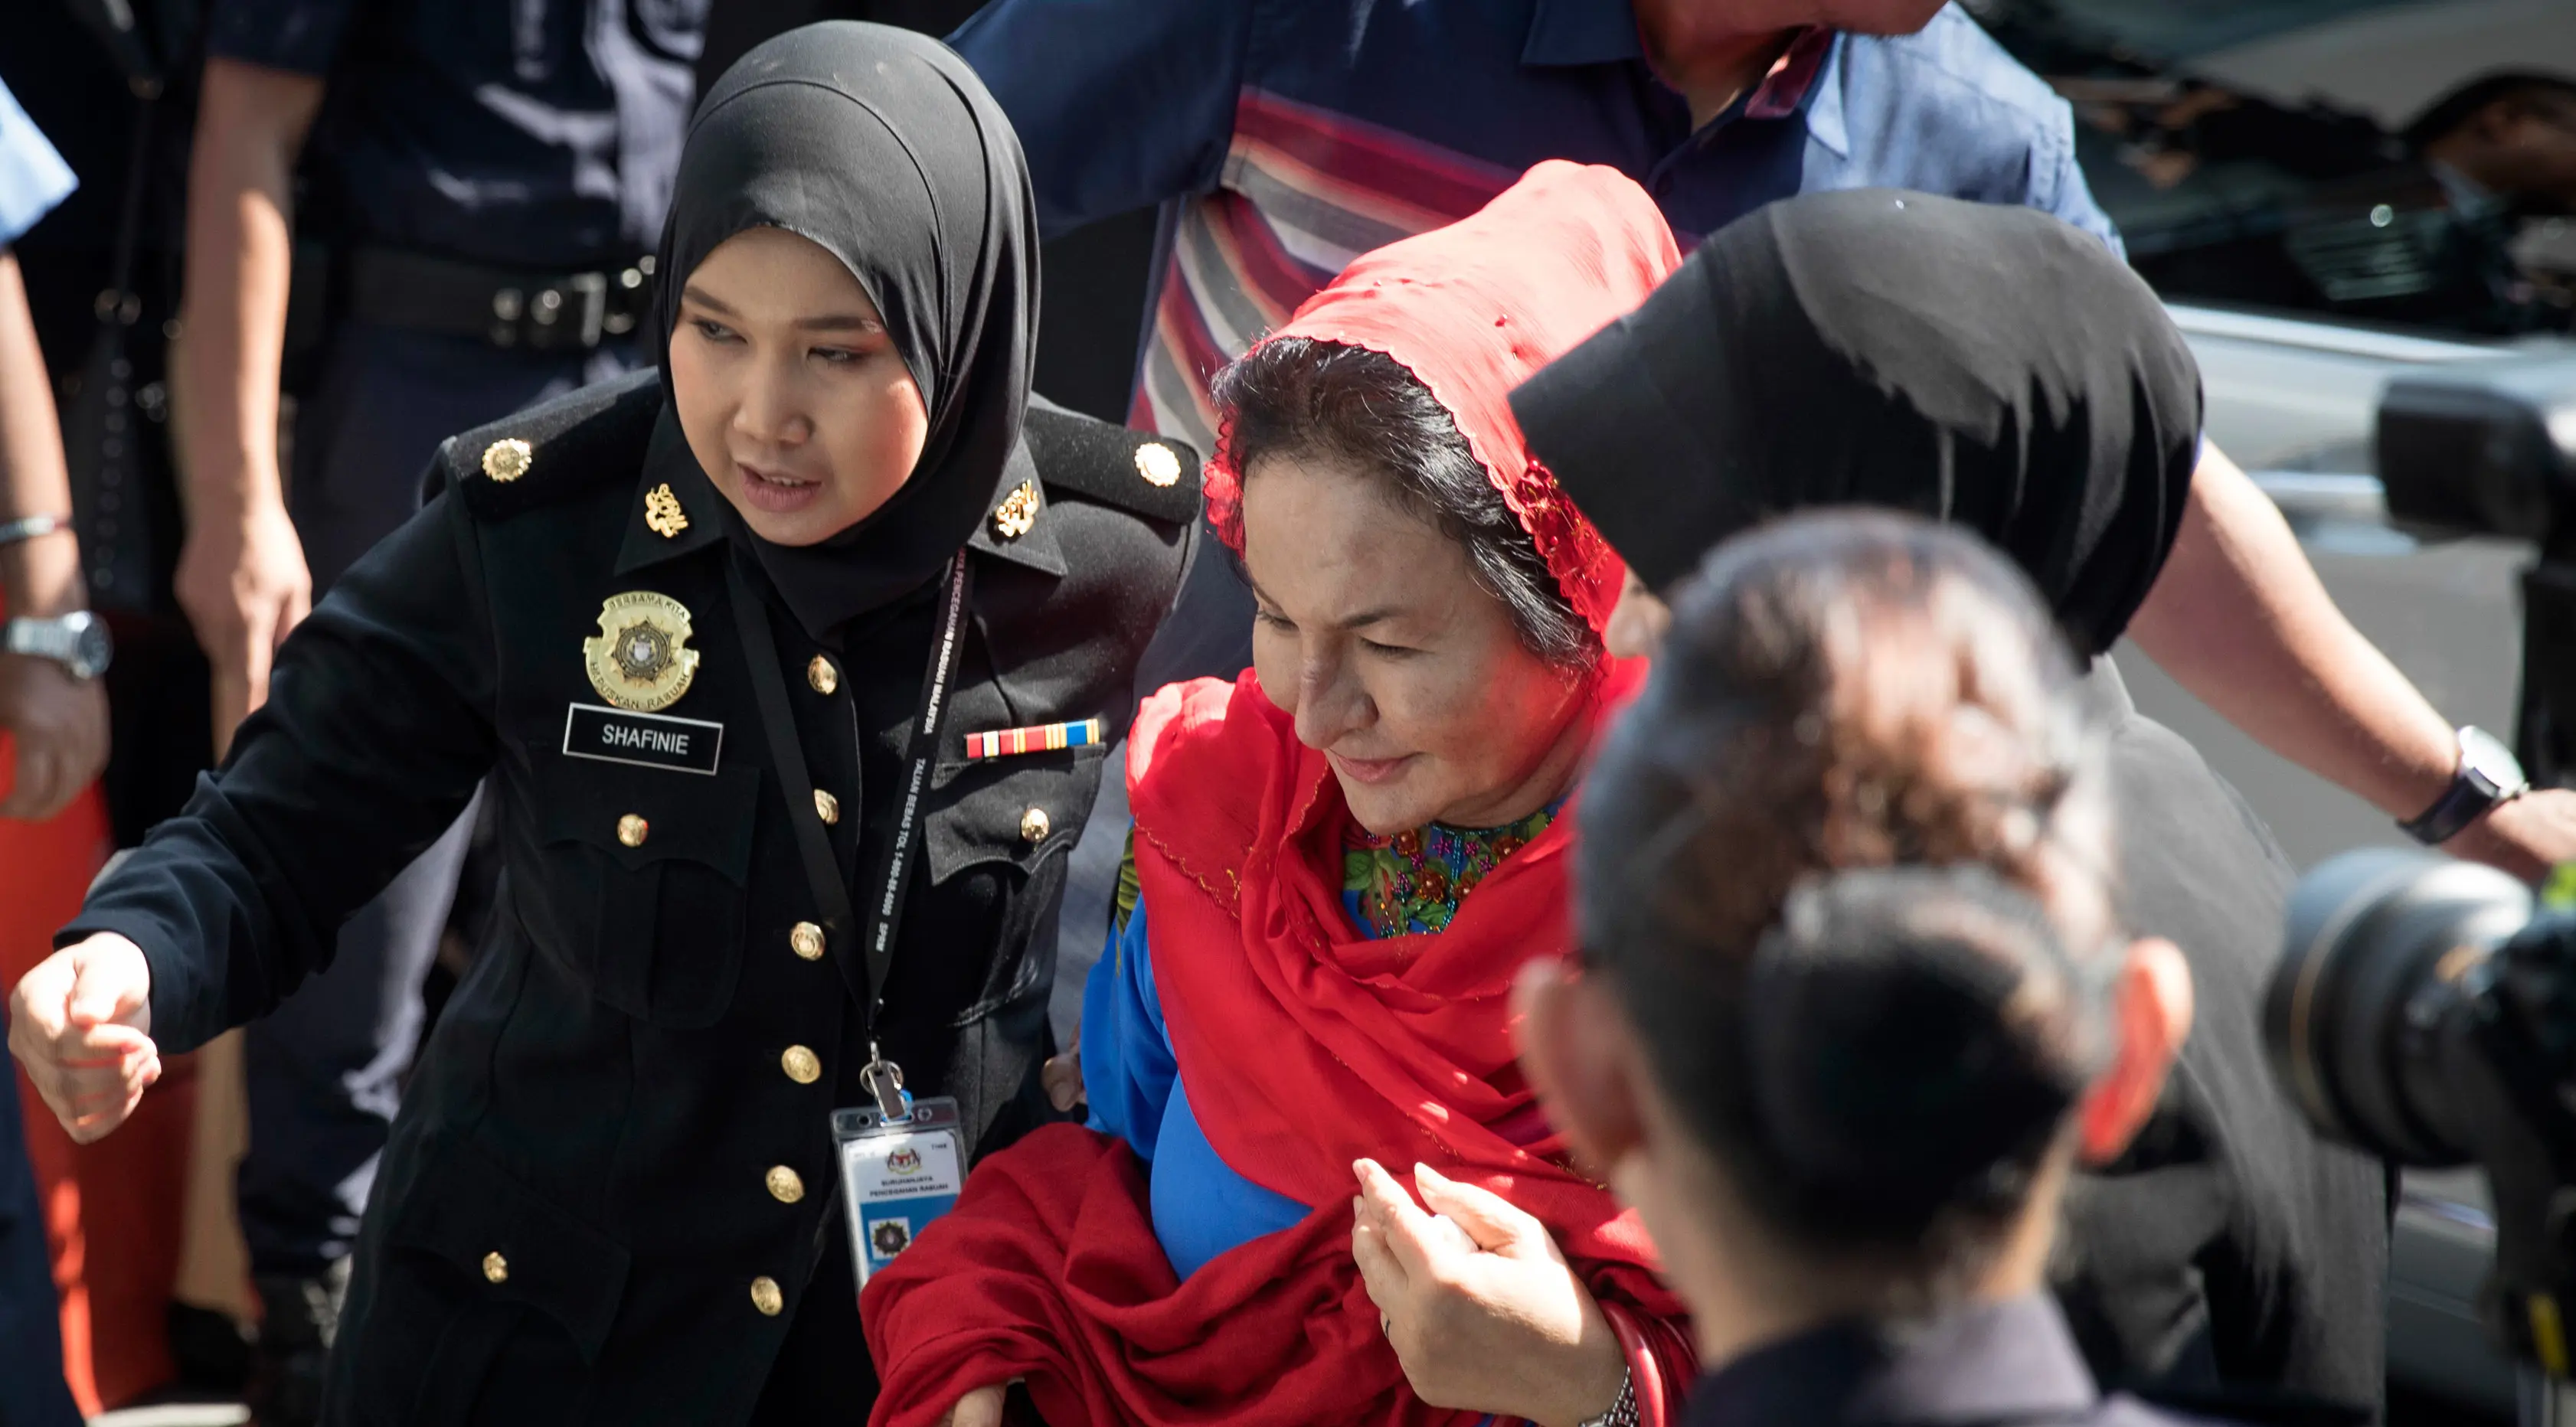 Istri mantan Perdana Menteri Malaysia Najib Razak, Rosmah Mansor dikawal petugas saat memenuhi panggilan Komisi Antikorupsi Malaysia (MACC) di Putrajaya, Selasa (6/5). Rosmah tampak tenang turun dari mobil dan berjalan ke kantor MACC. (AP/Vincent Thian)